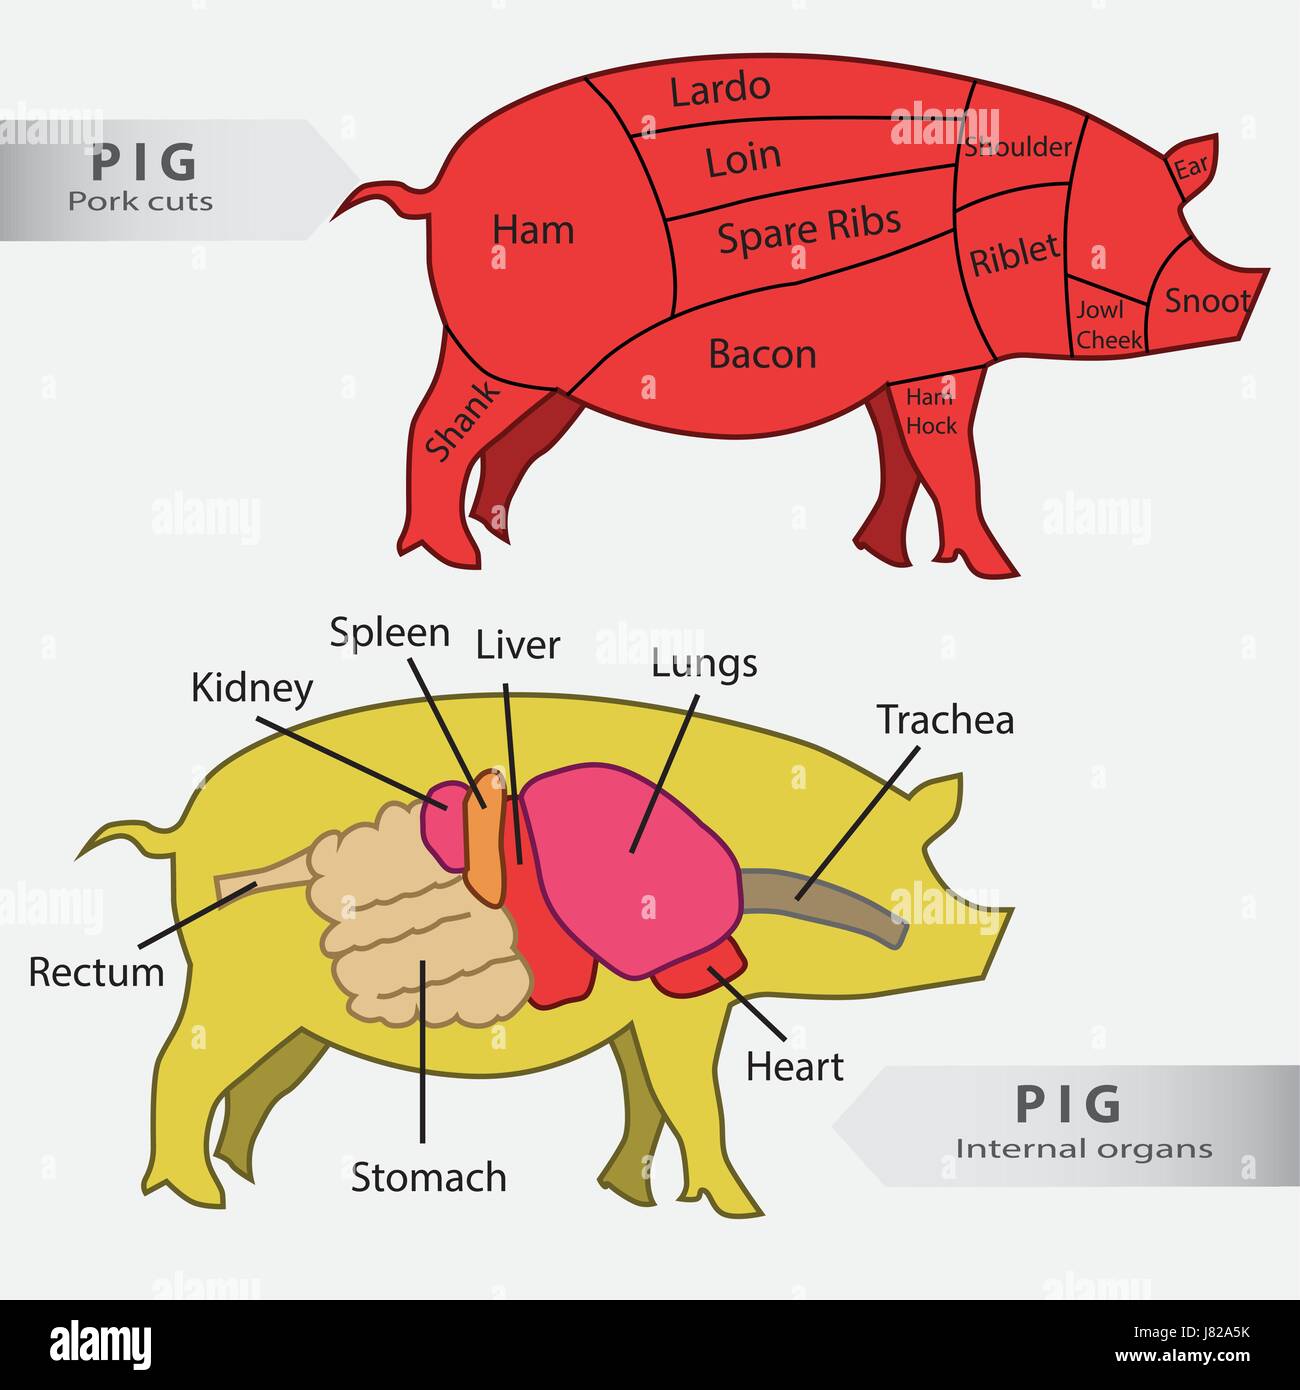 Basic  pig internal organs and cuts chart vector Stock Vector